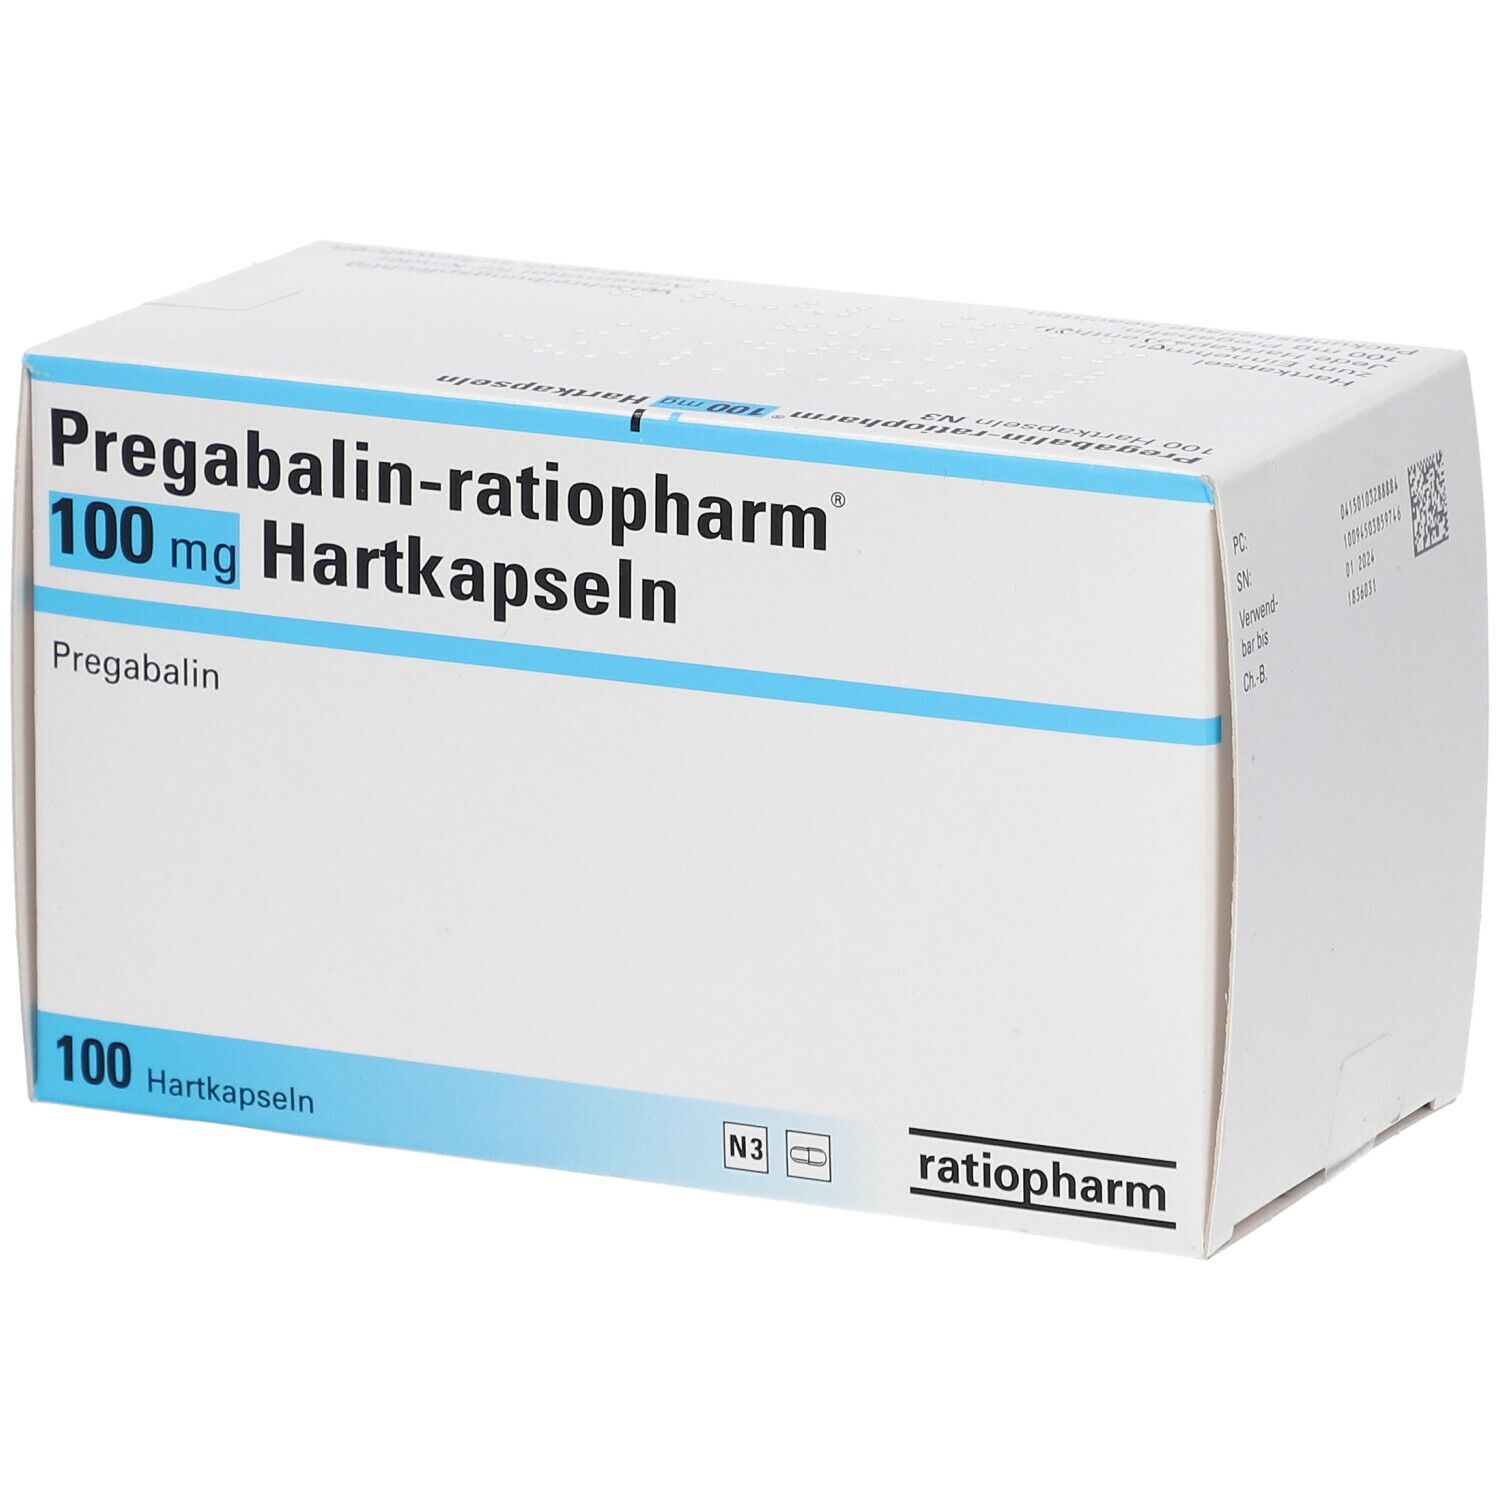 Pregabalin-ratiopharm® 100 mg